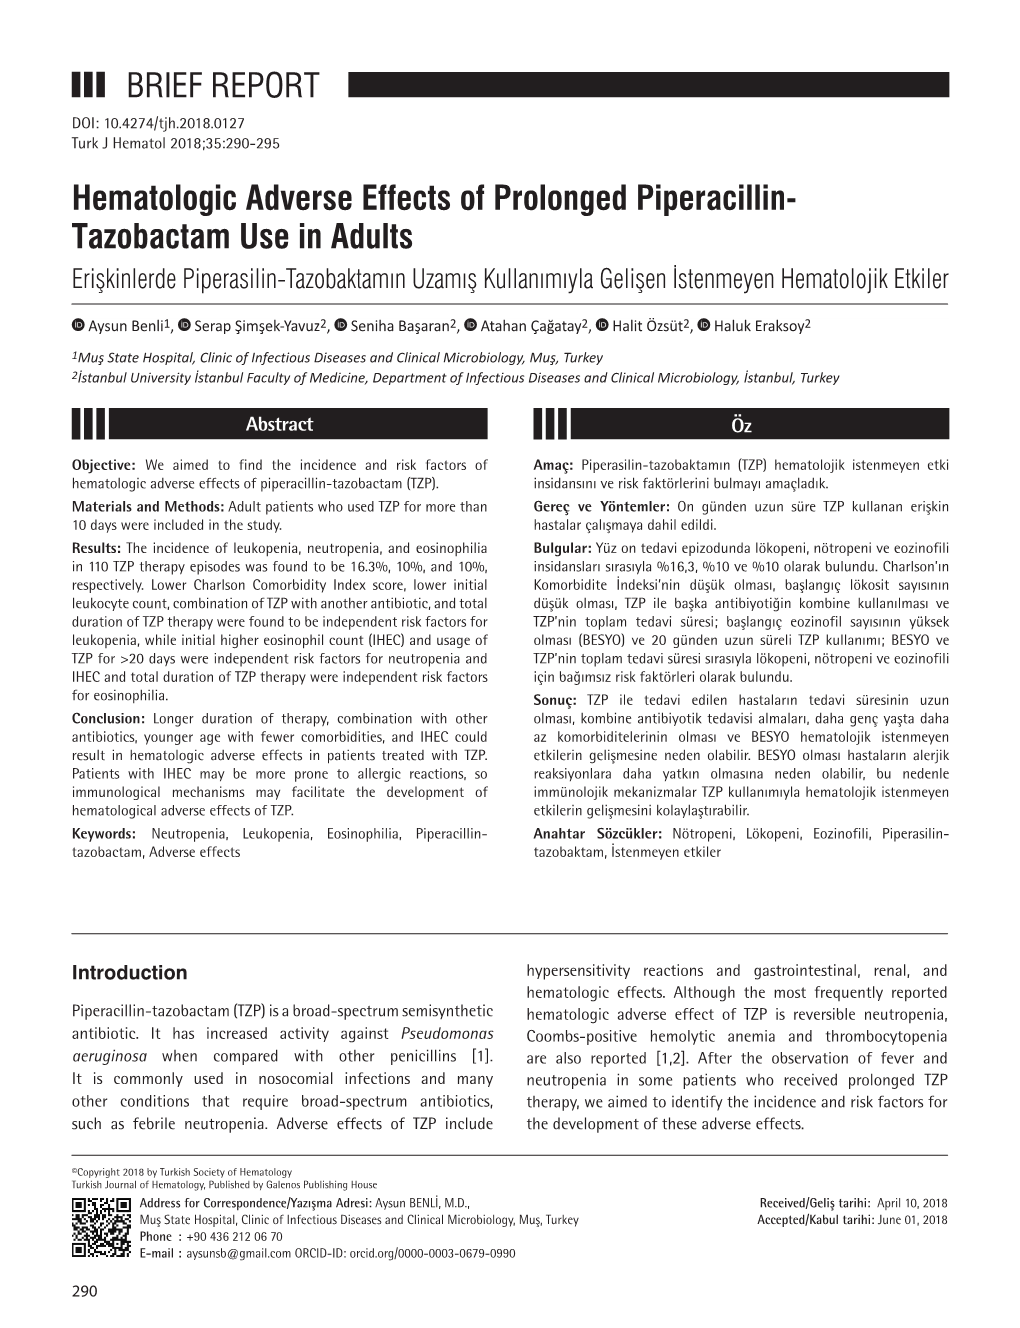 Hematologic Adverse Effects of Prolonged Piperacillin